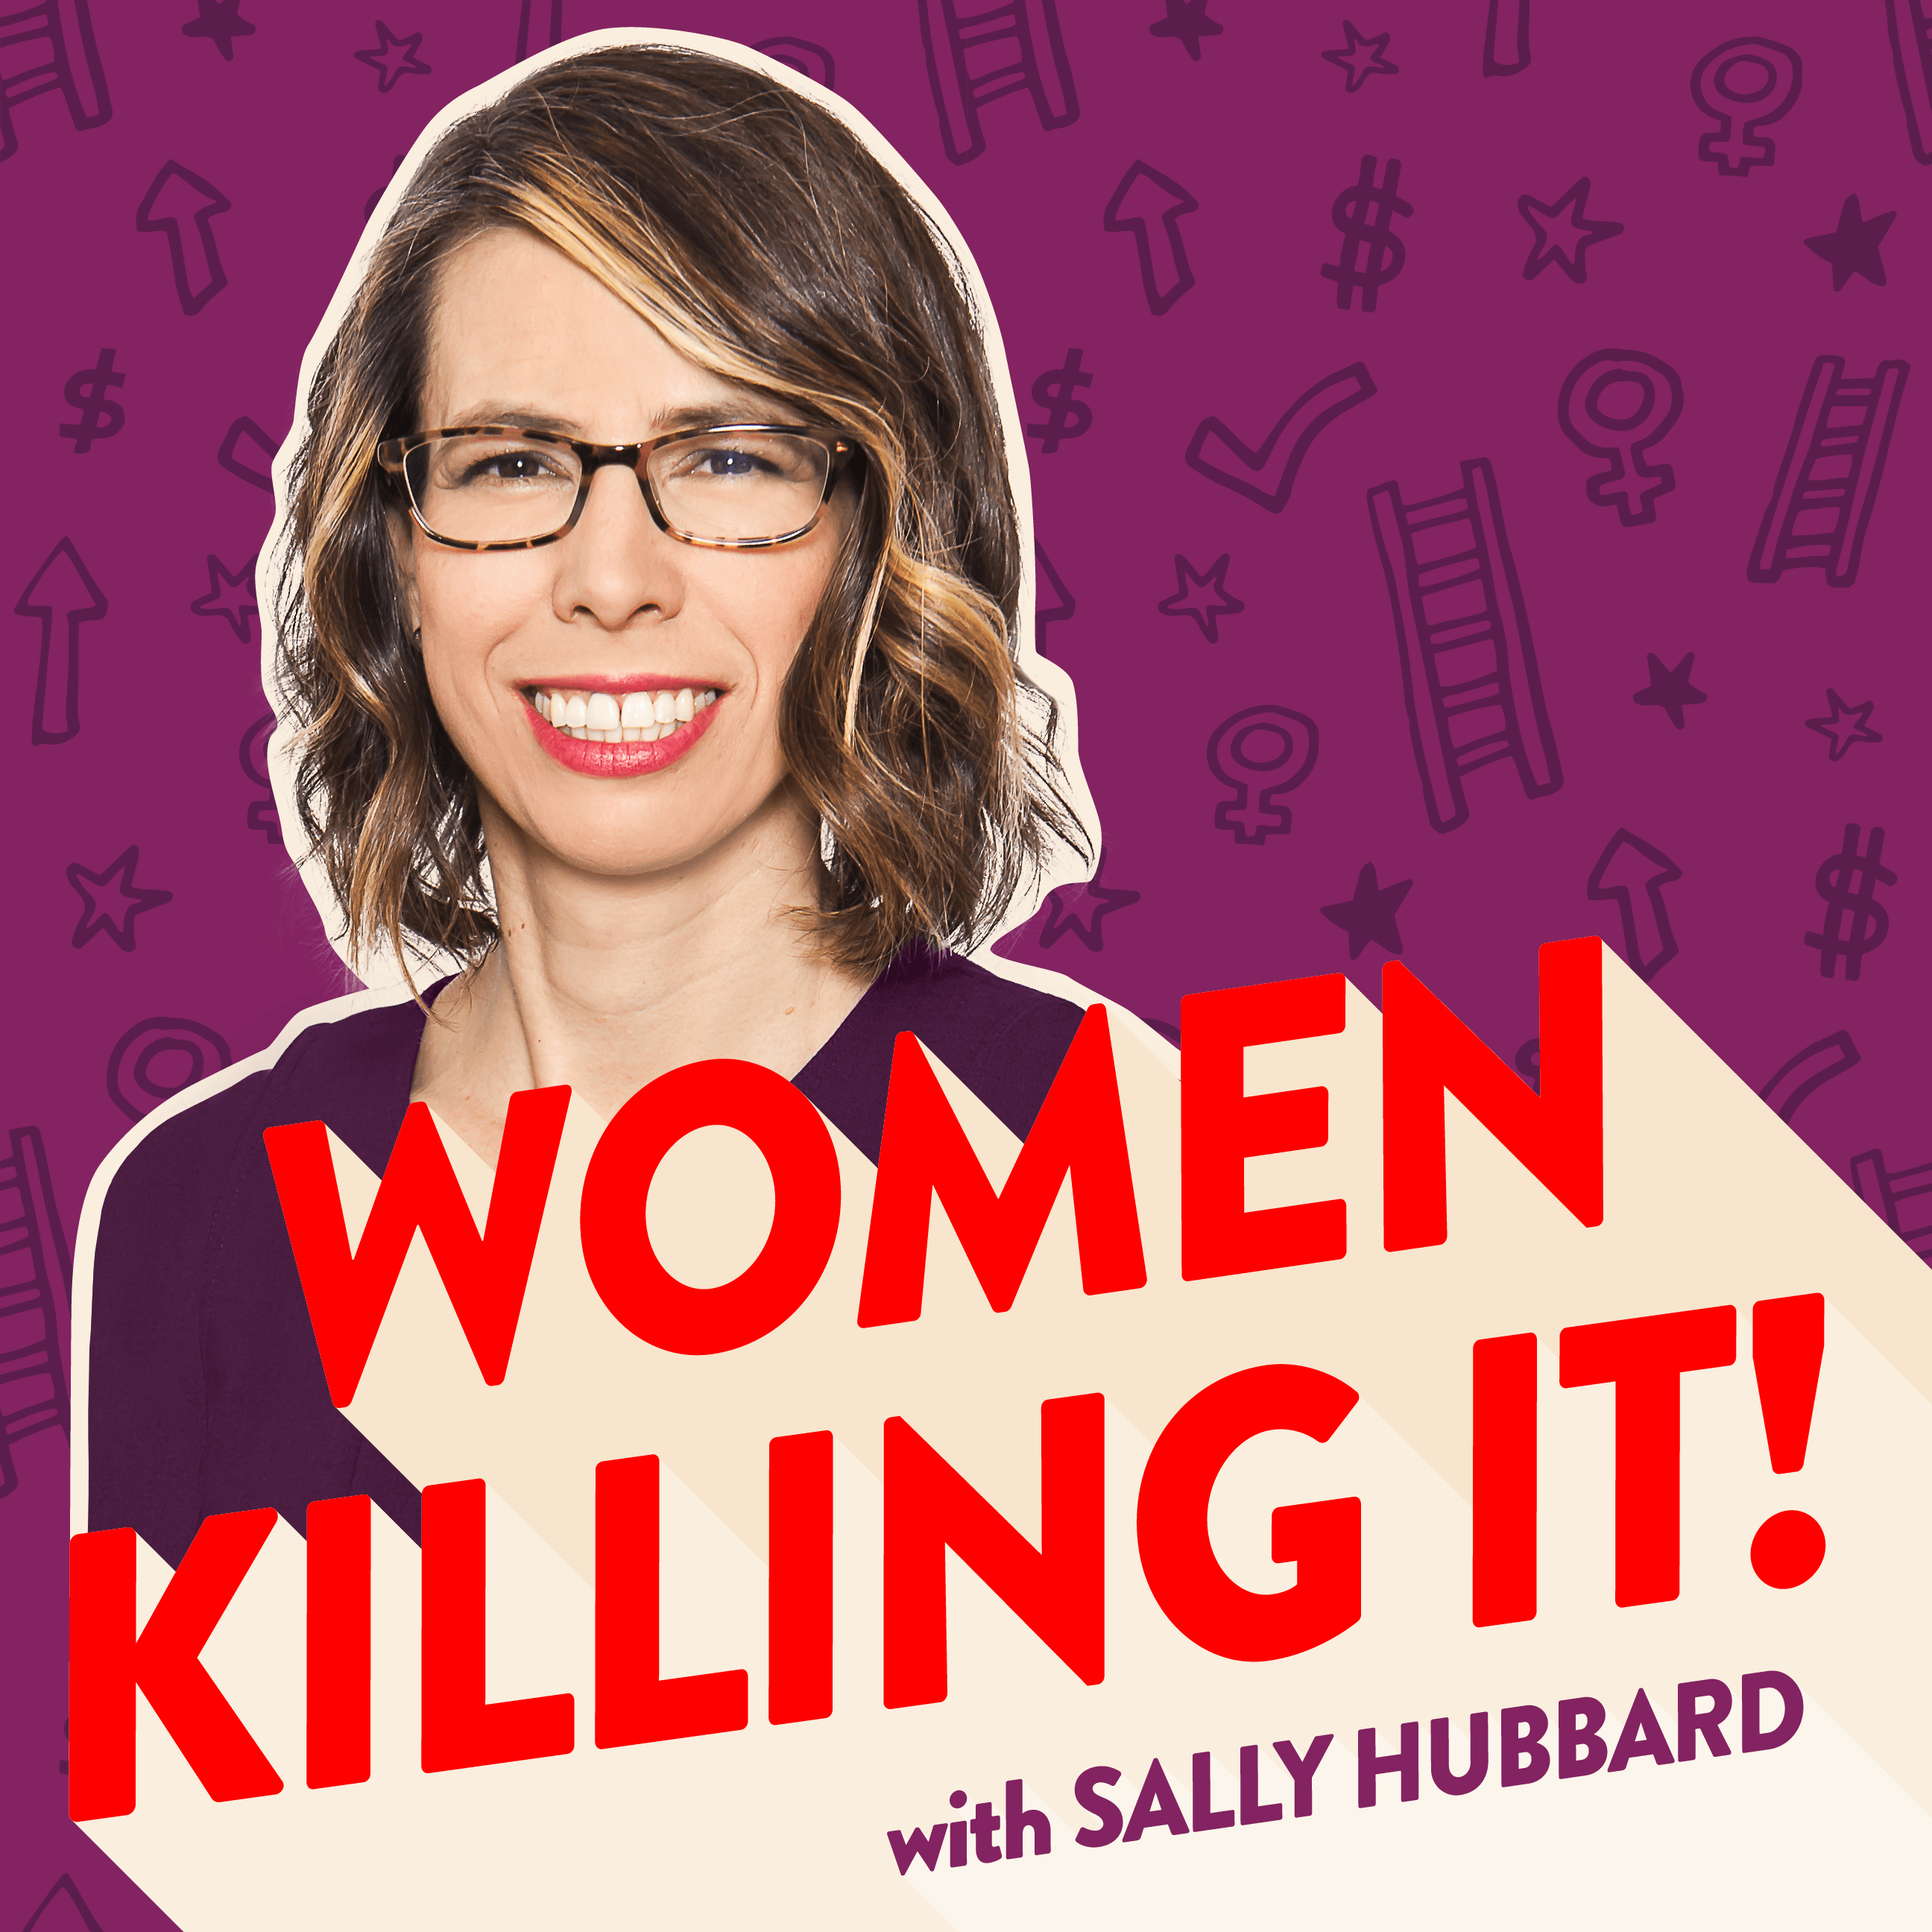 Women Killing It, with Sally Hubbard